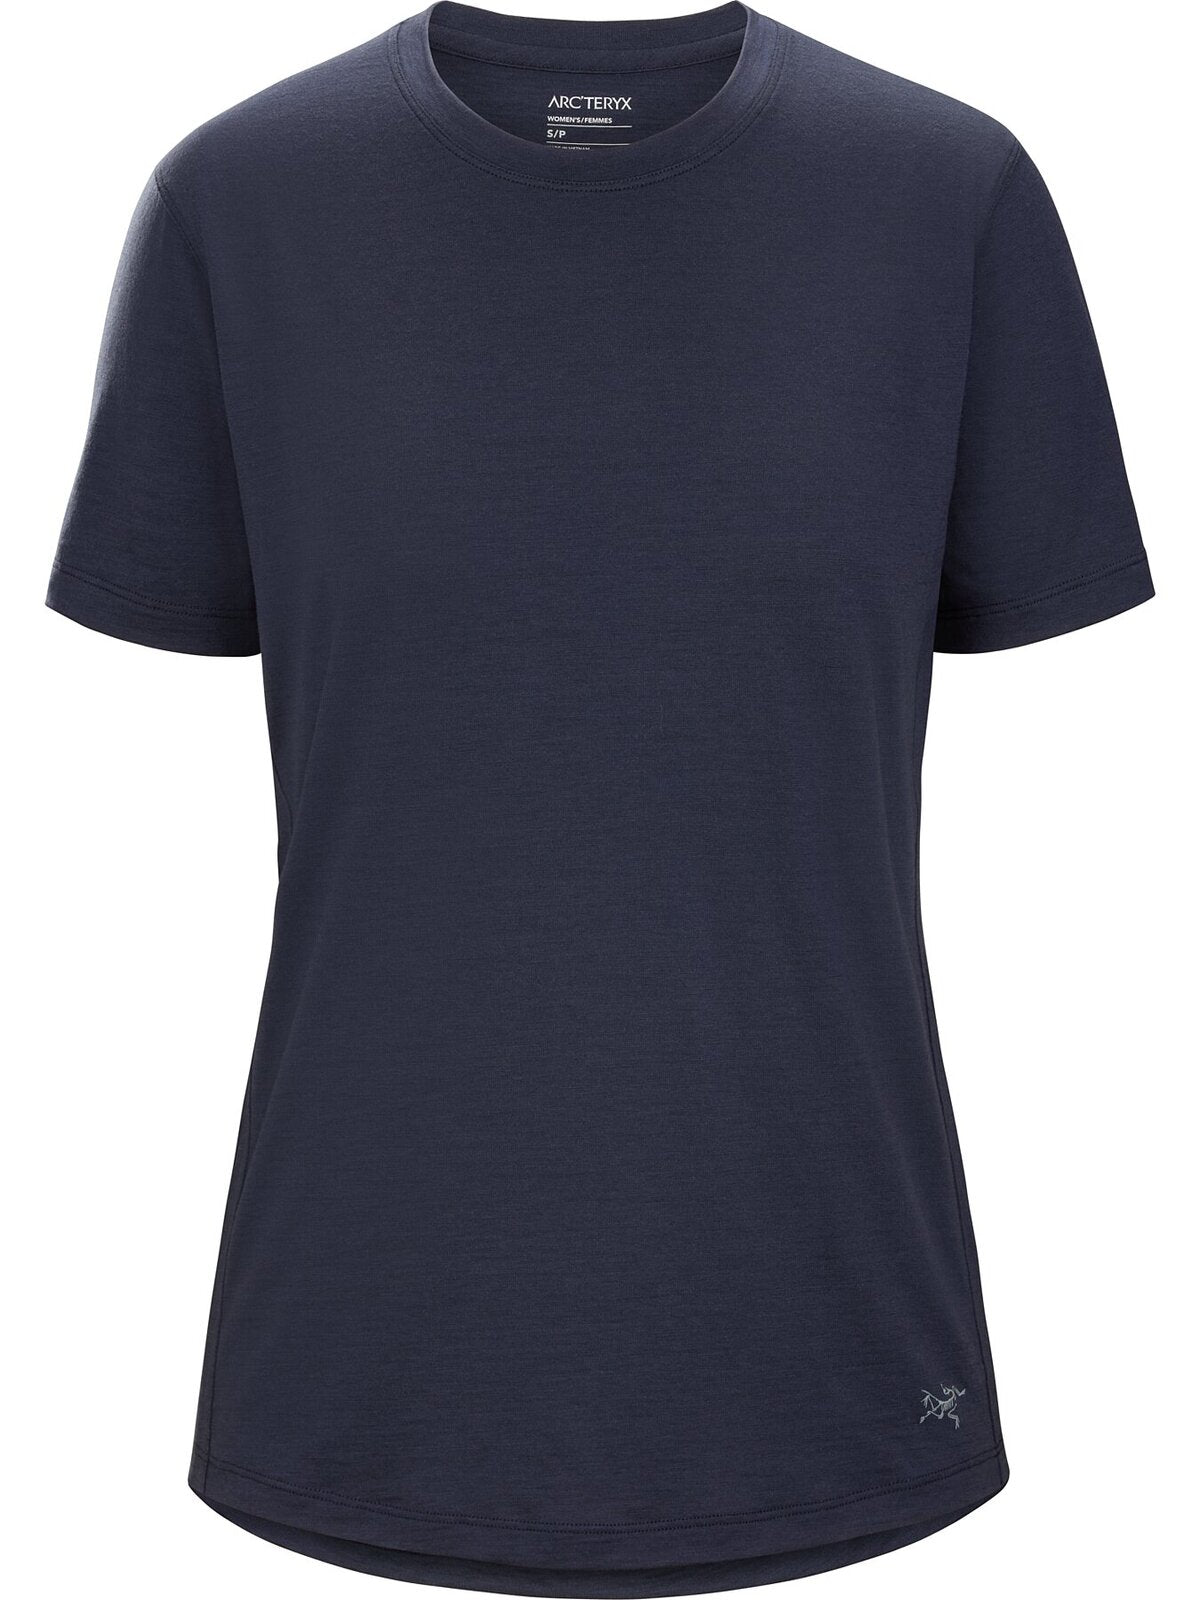 Lana Merino Crew Neck Short Sleeve Shirt for Women